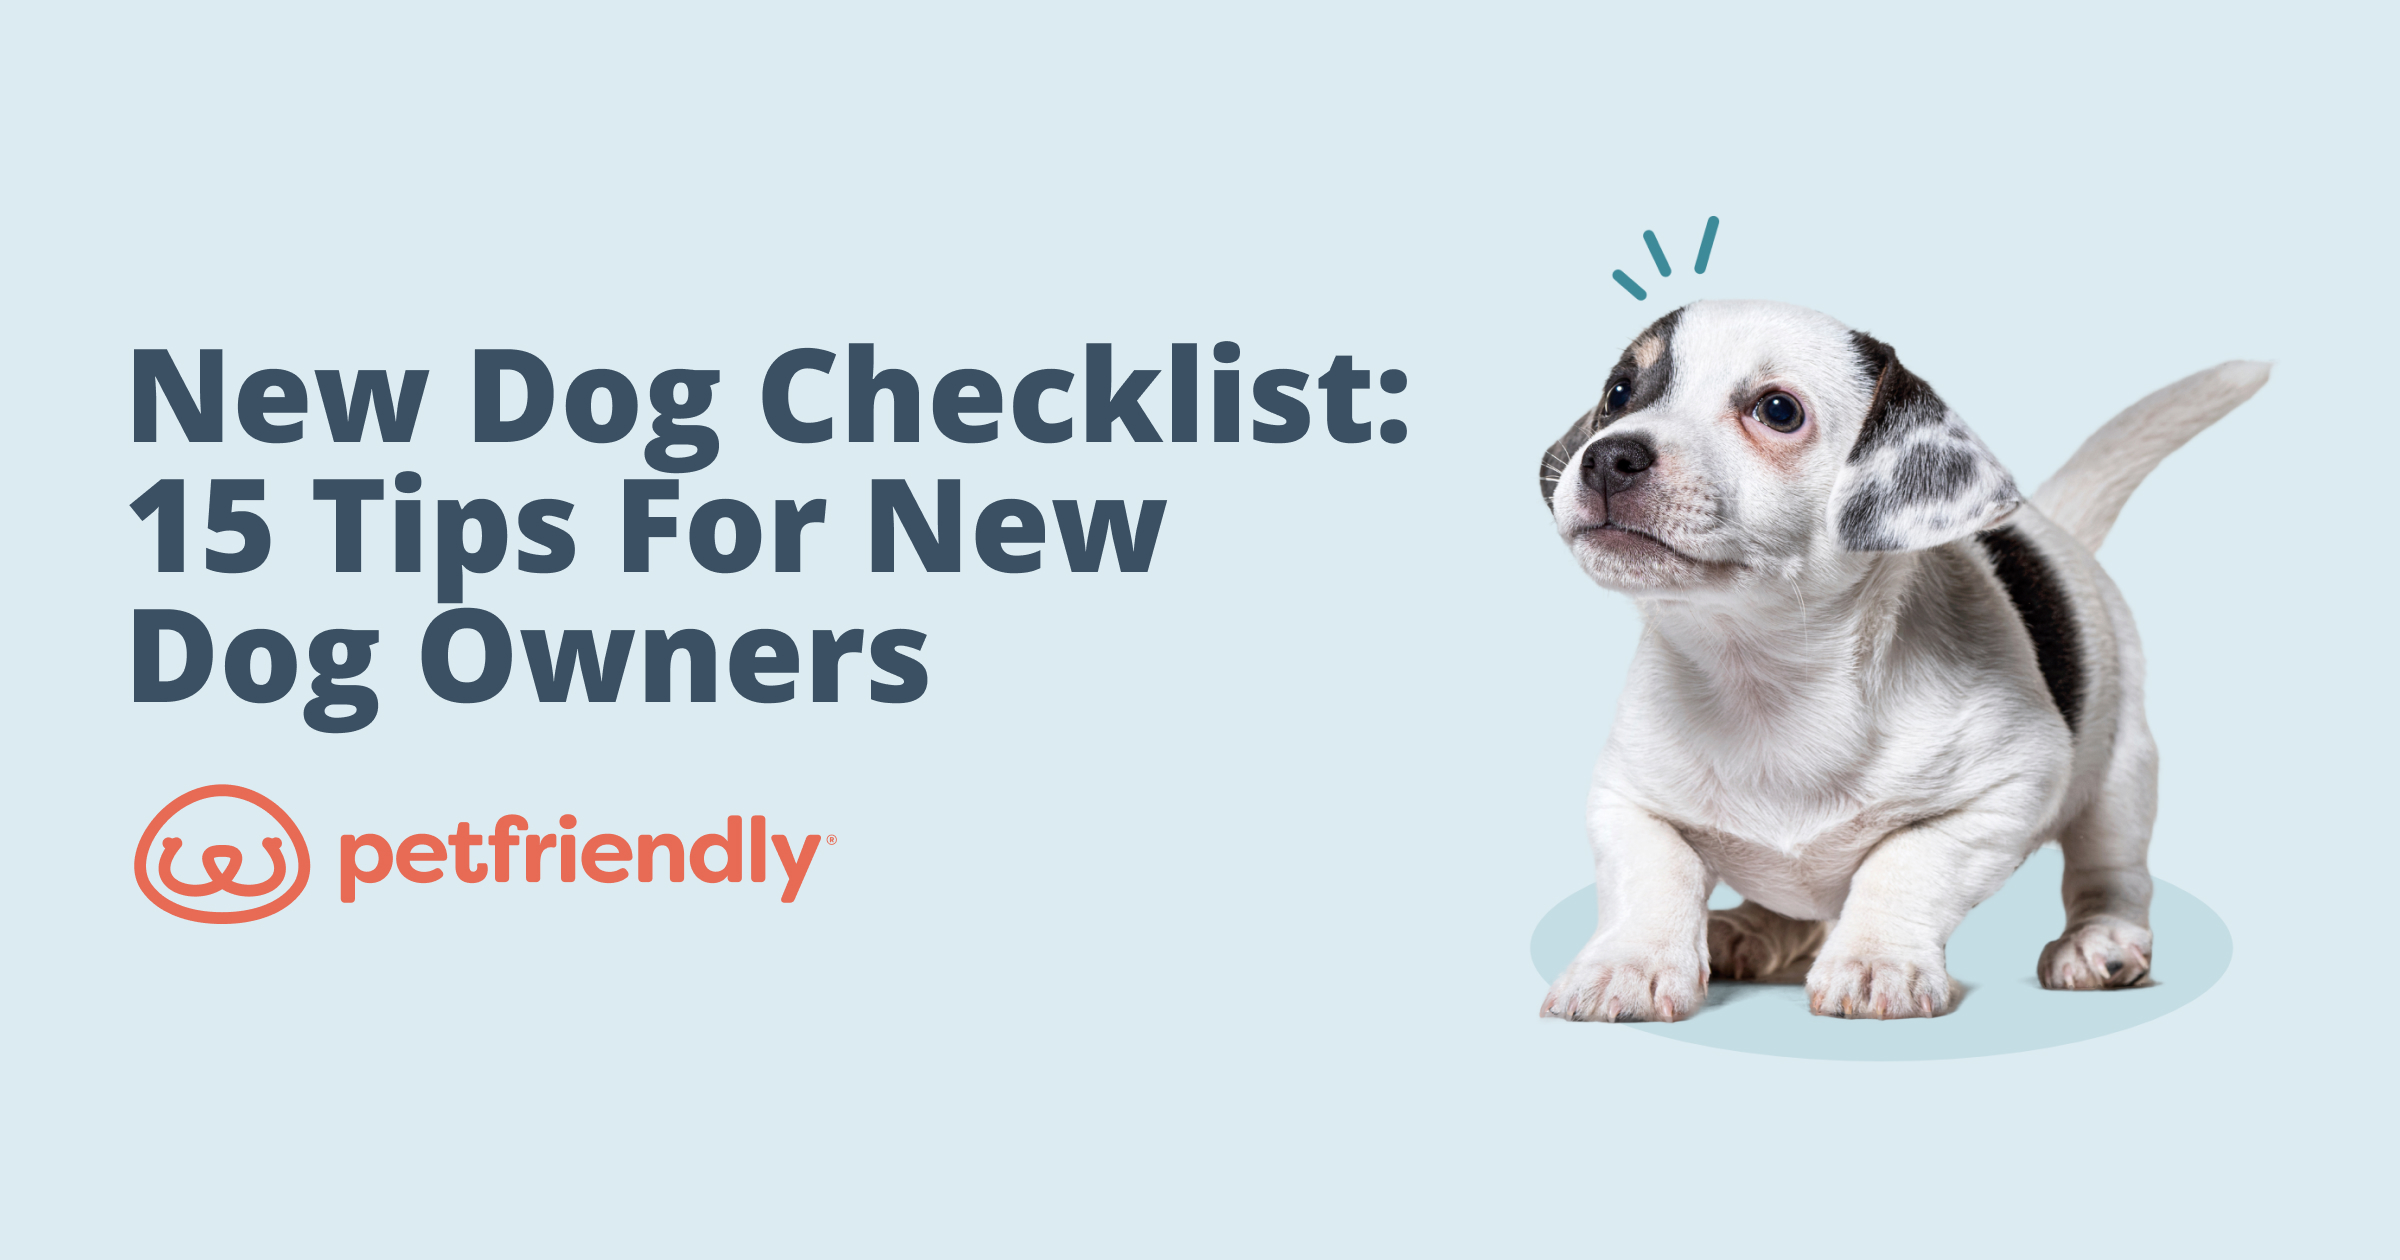 https://pfd-public.s3.amazonaws.com/resource-center-og-image/new-dog-checklist.jpg